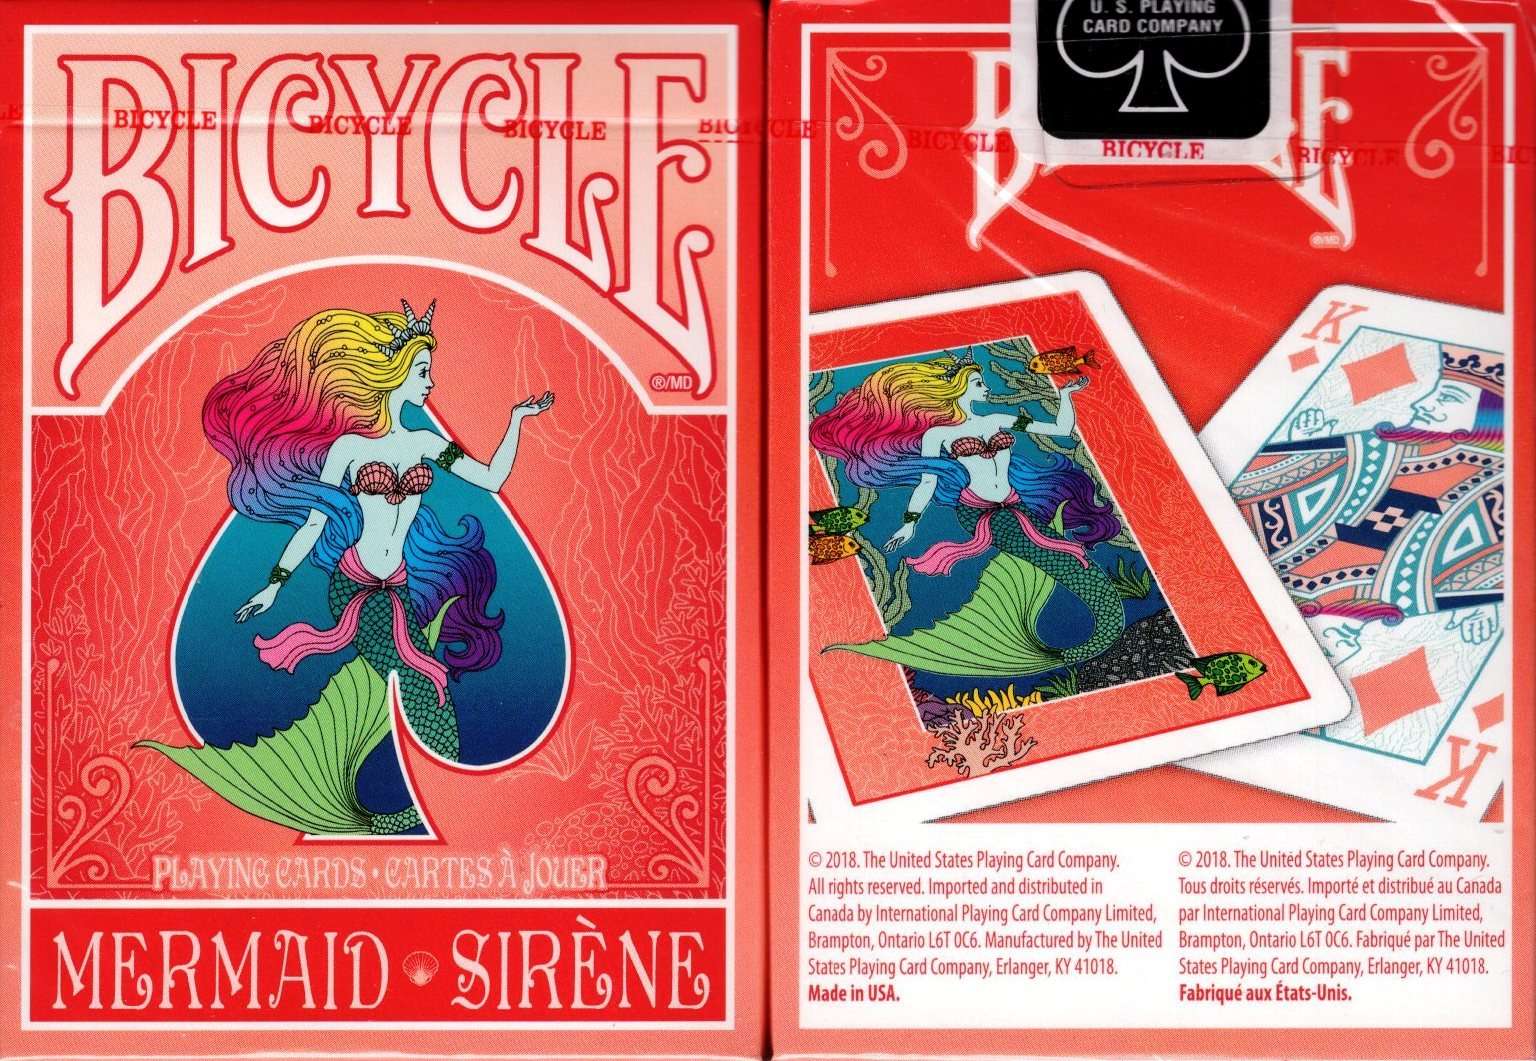 PlayingCardDecks.com-Mermaid Bicycle Playing Cards: Corral